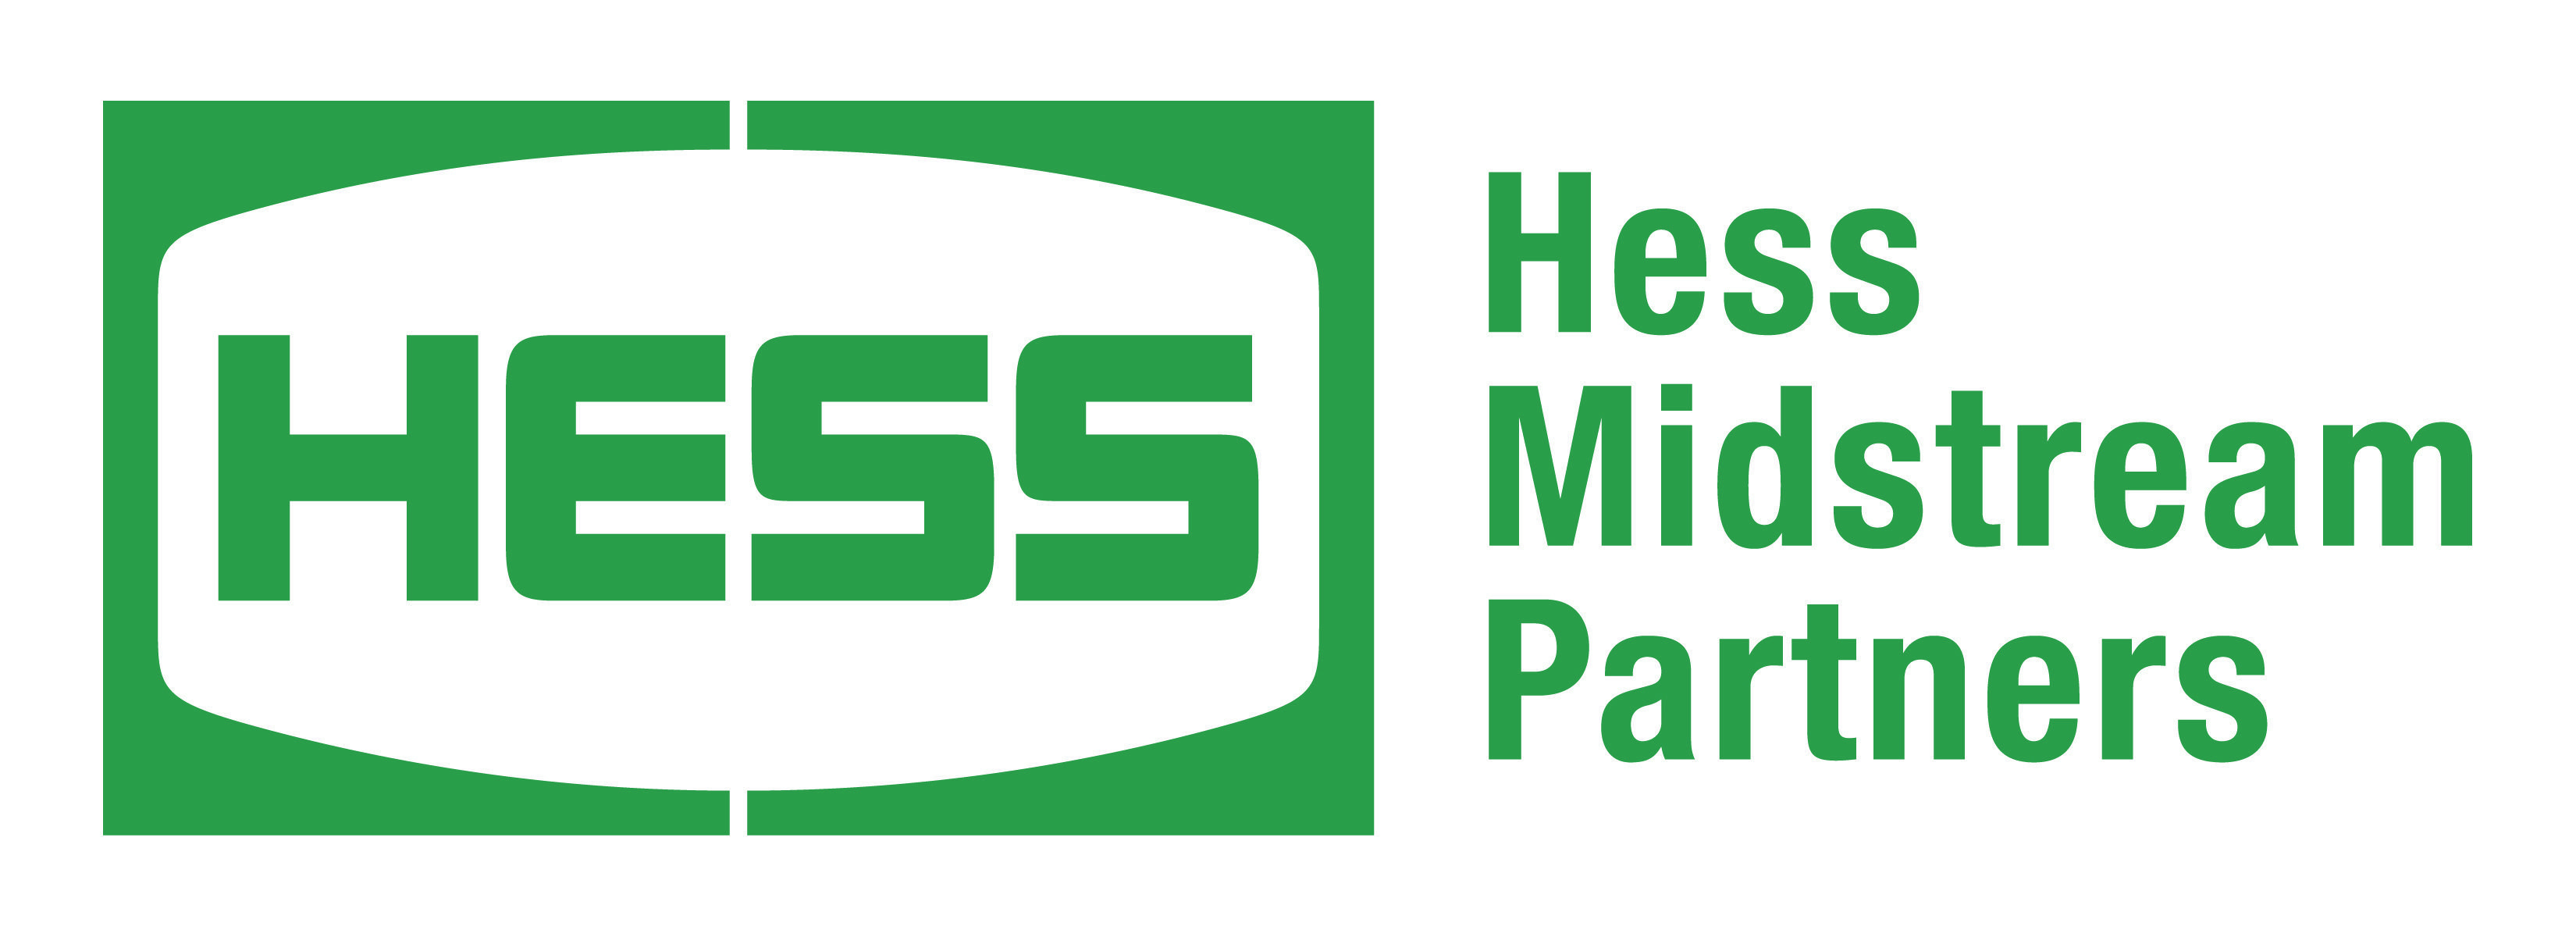 Hess Logo - Operations Midstream Partners